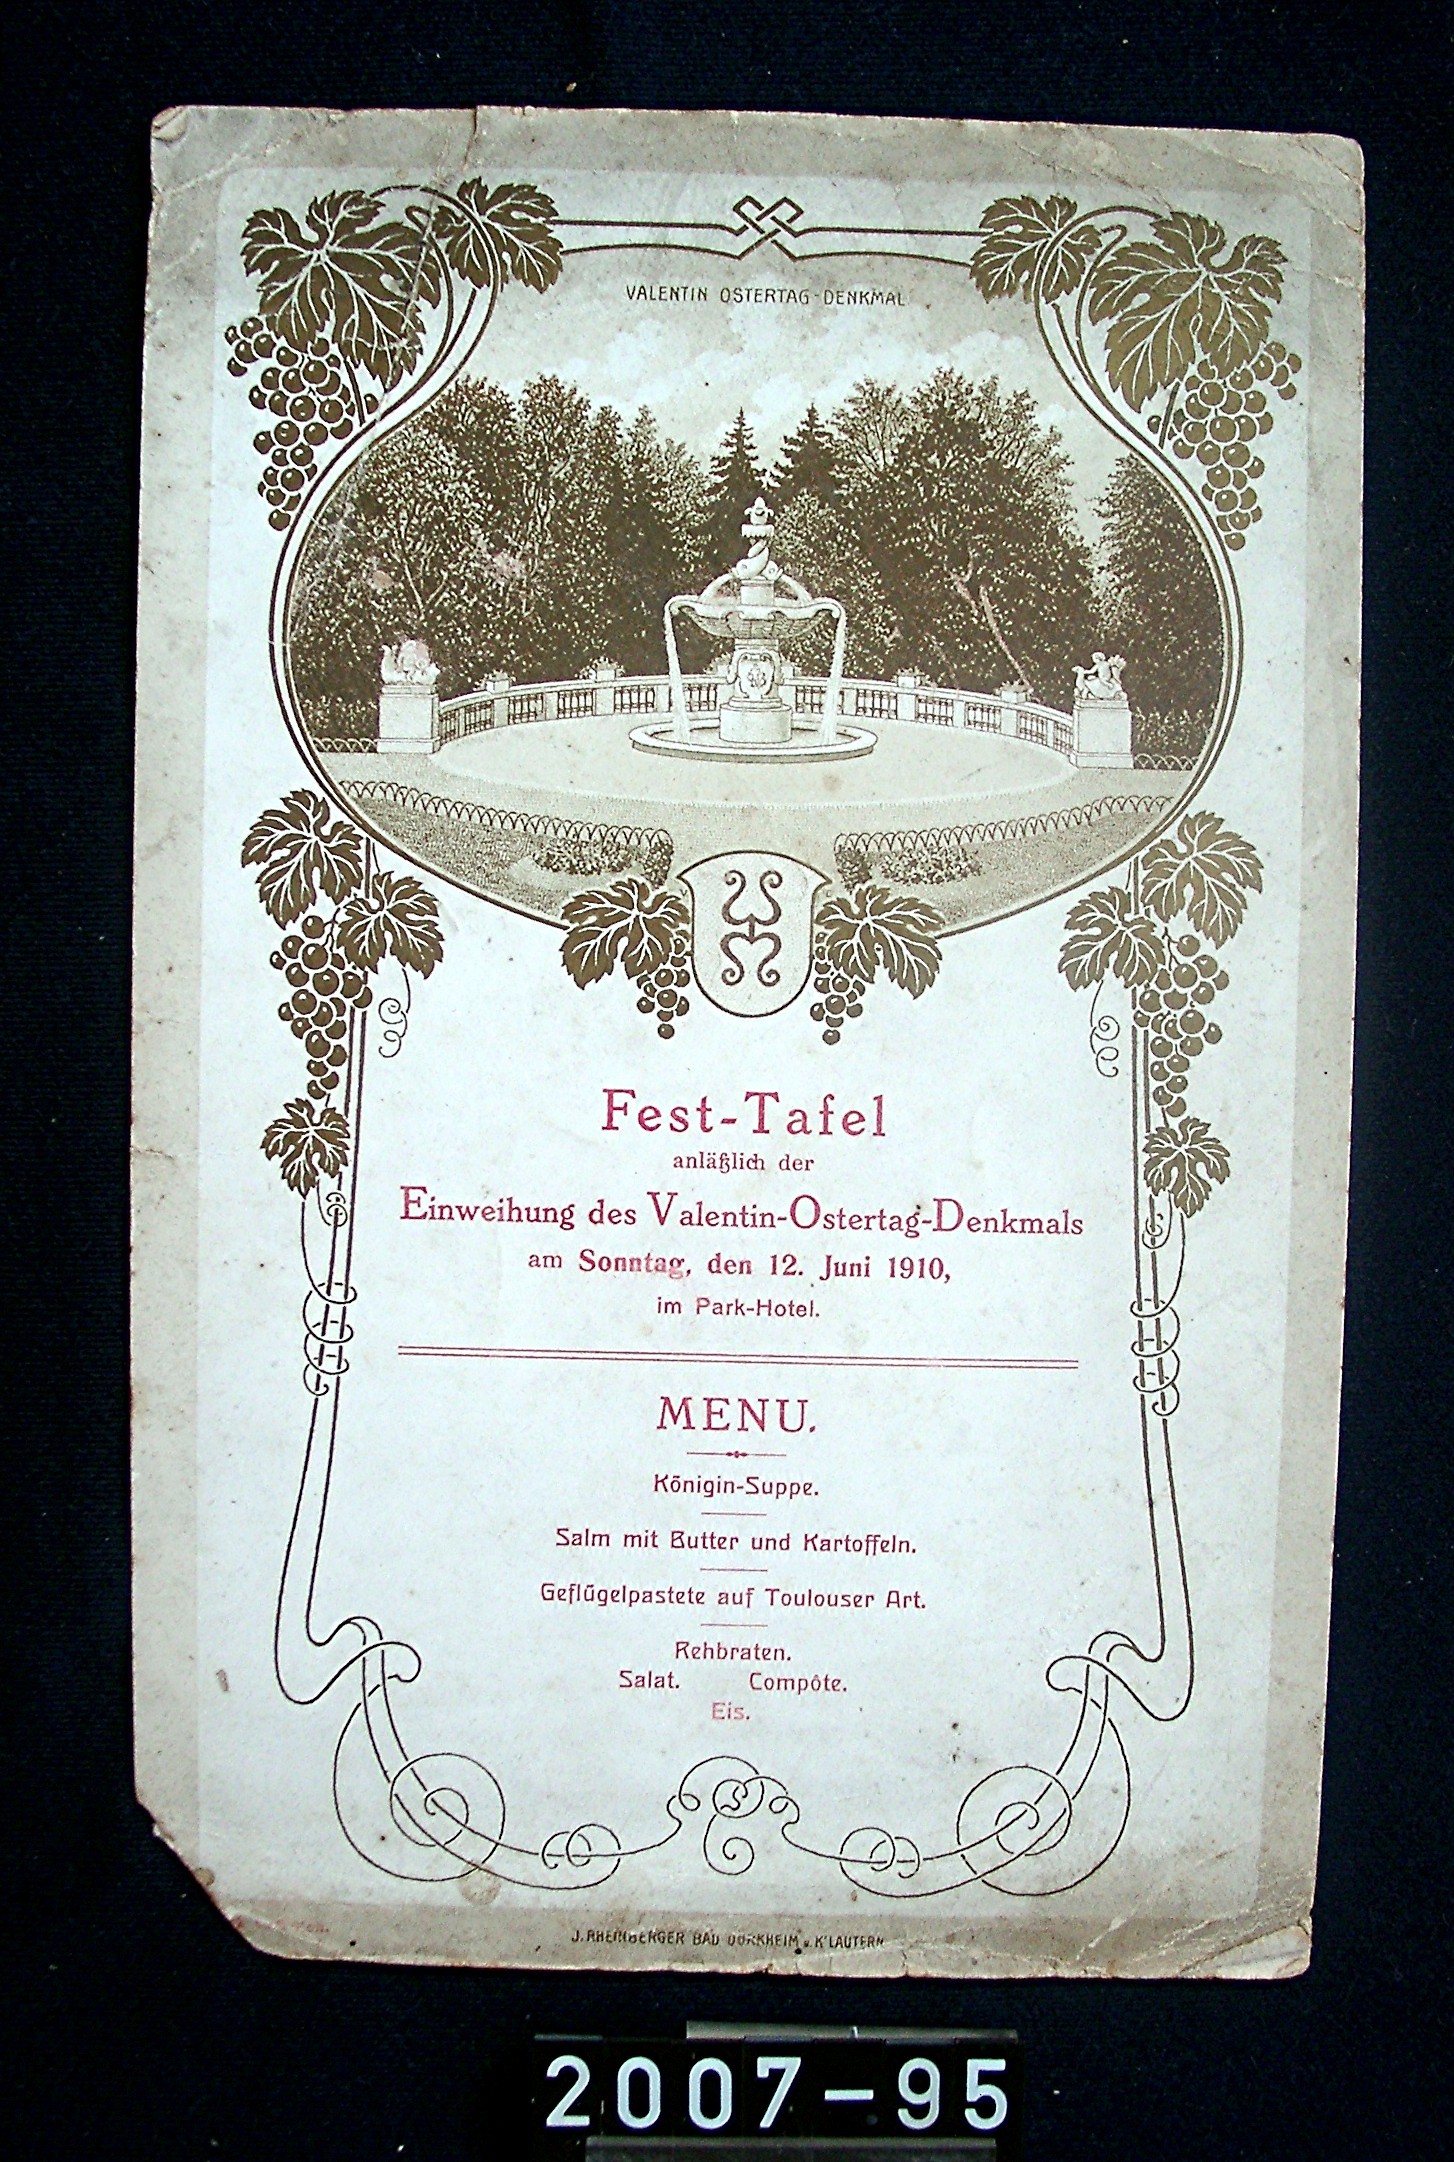 Einladung, Fest-Tafel des Valentin-Ostertag-Denkmals, 1910 (Stadtmuseum Bad Dürkheim, Museumsgesellschaft Bad Dürkheim e.V. CC BY-NC-SA)